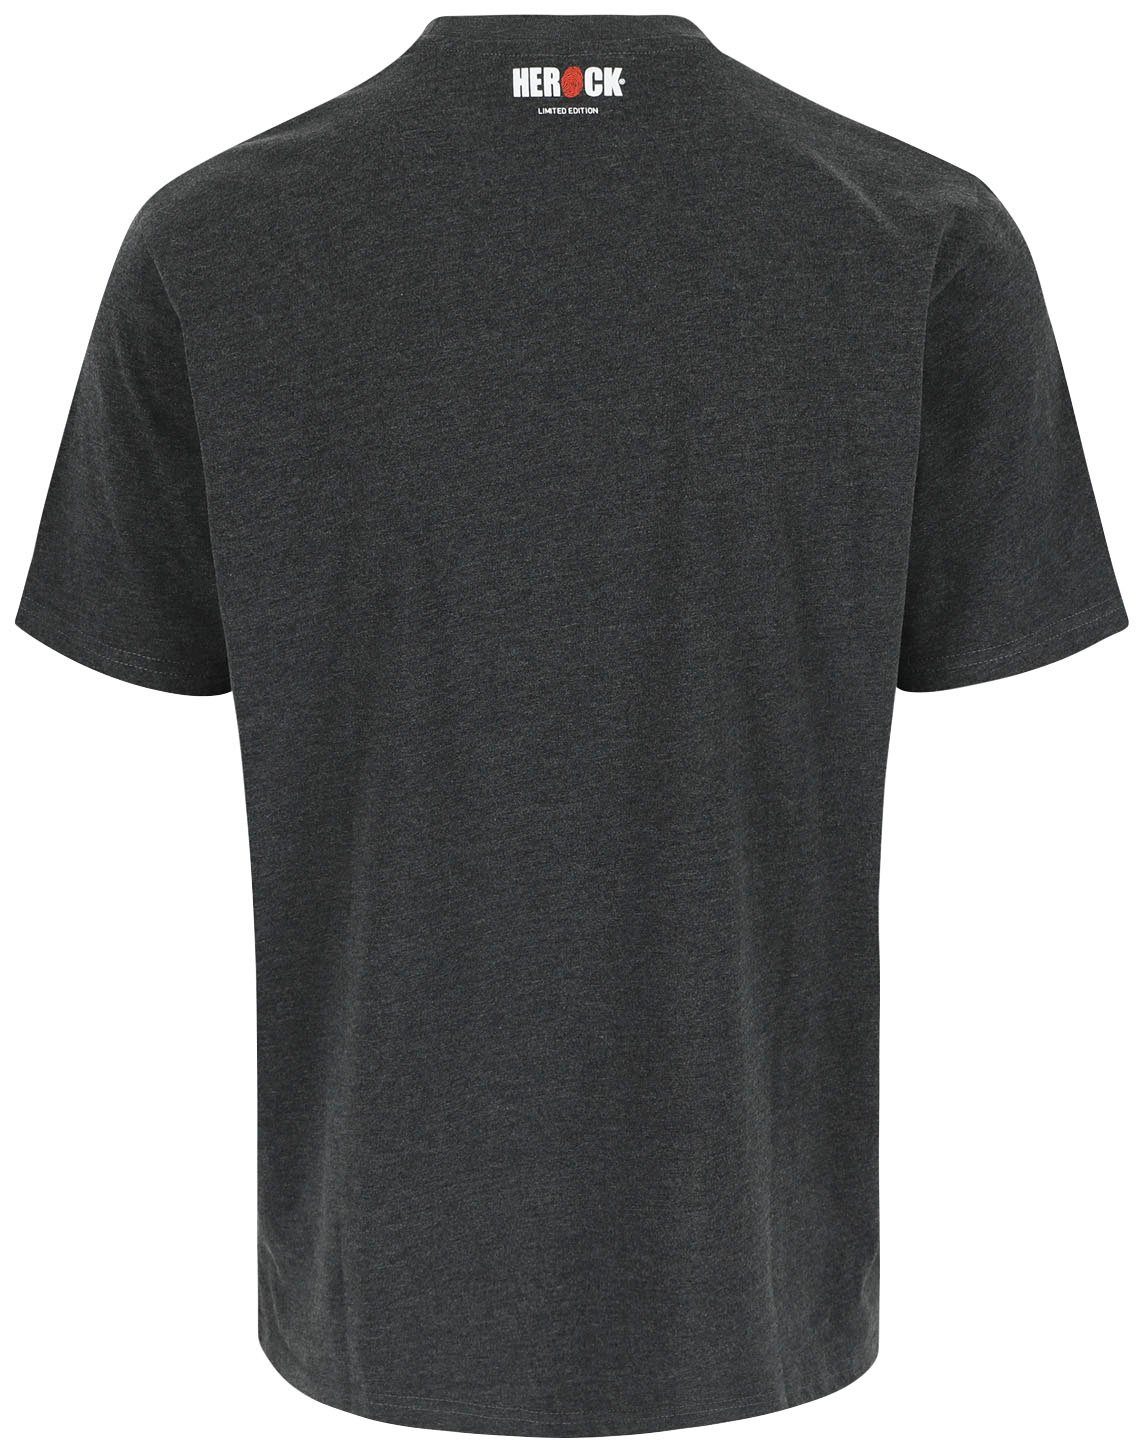 Herock Edition T-Shirt Maximus Limited